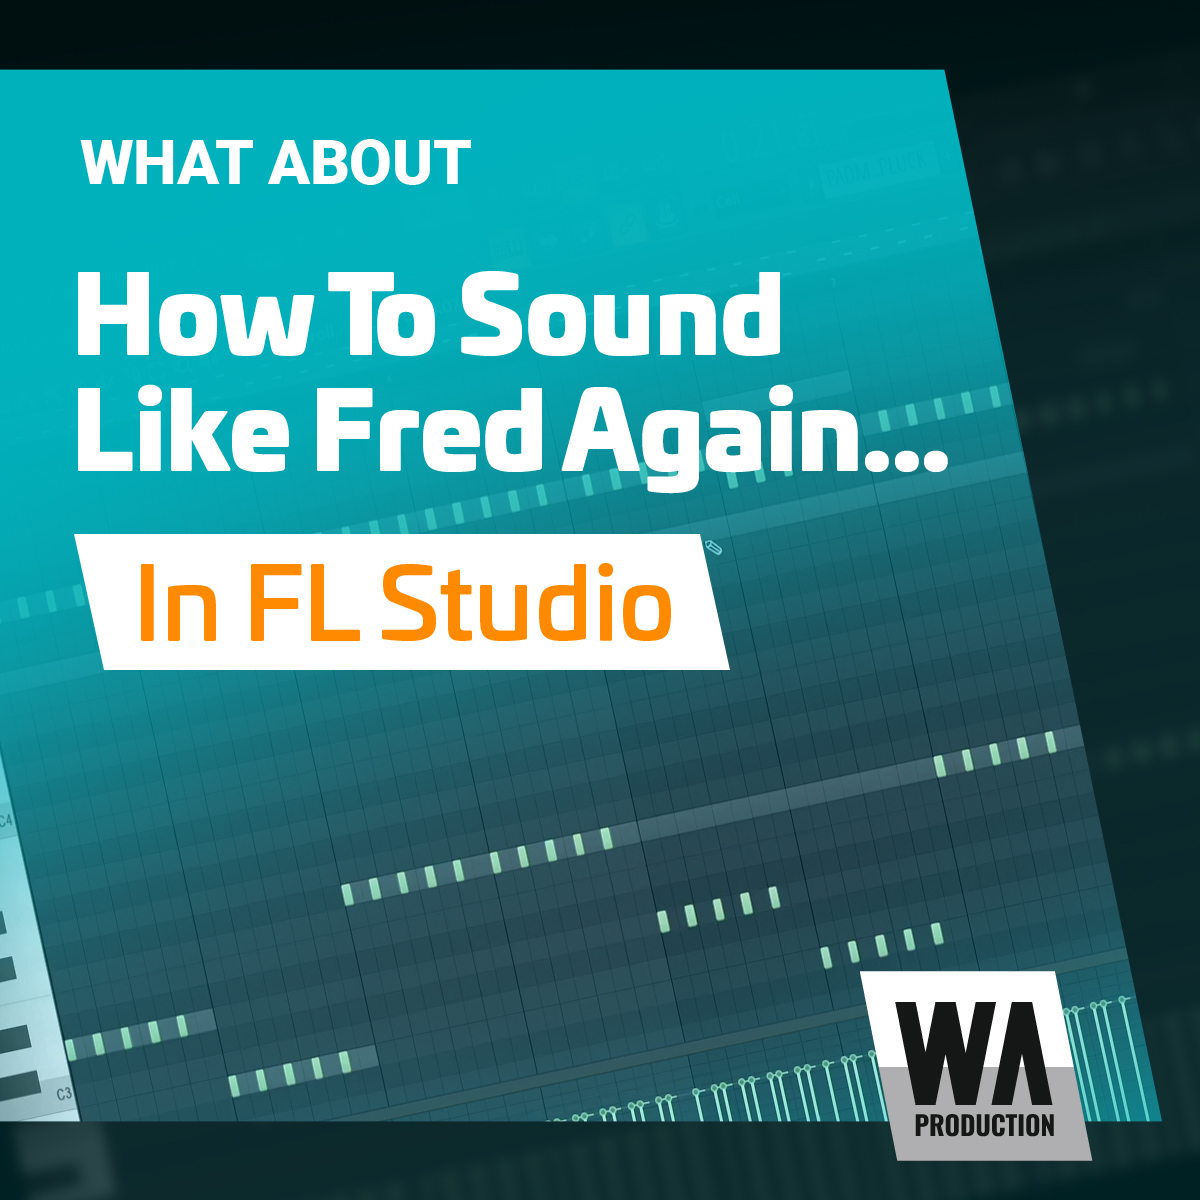 FL Studio Template